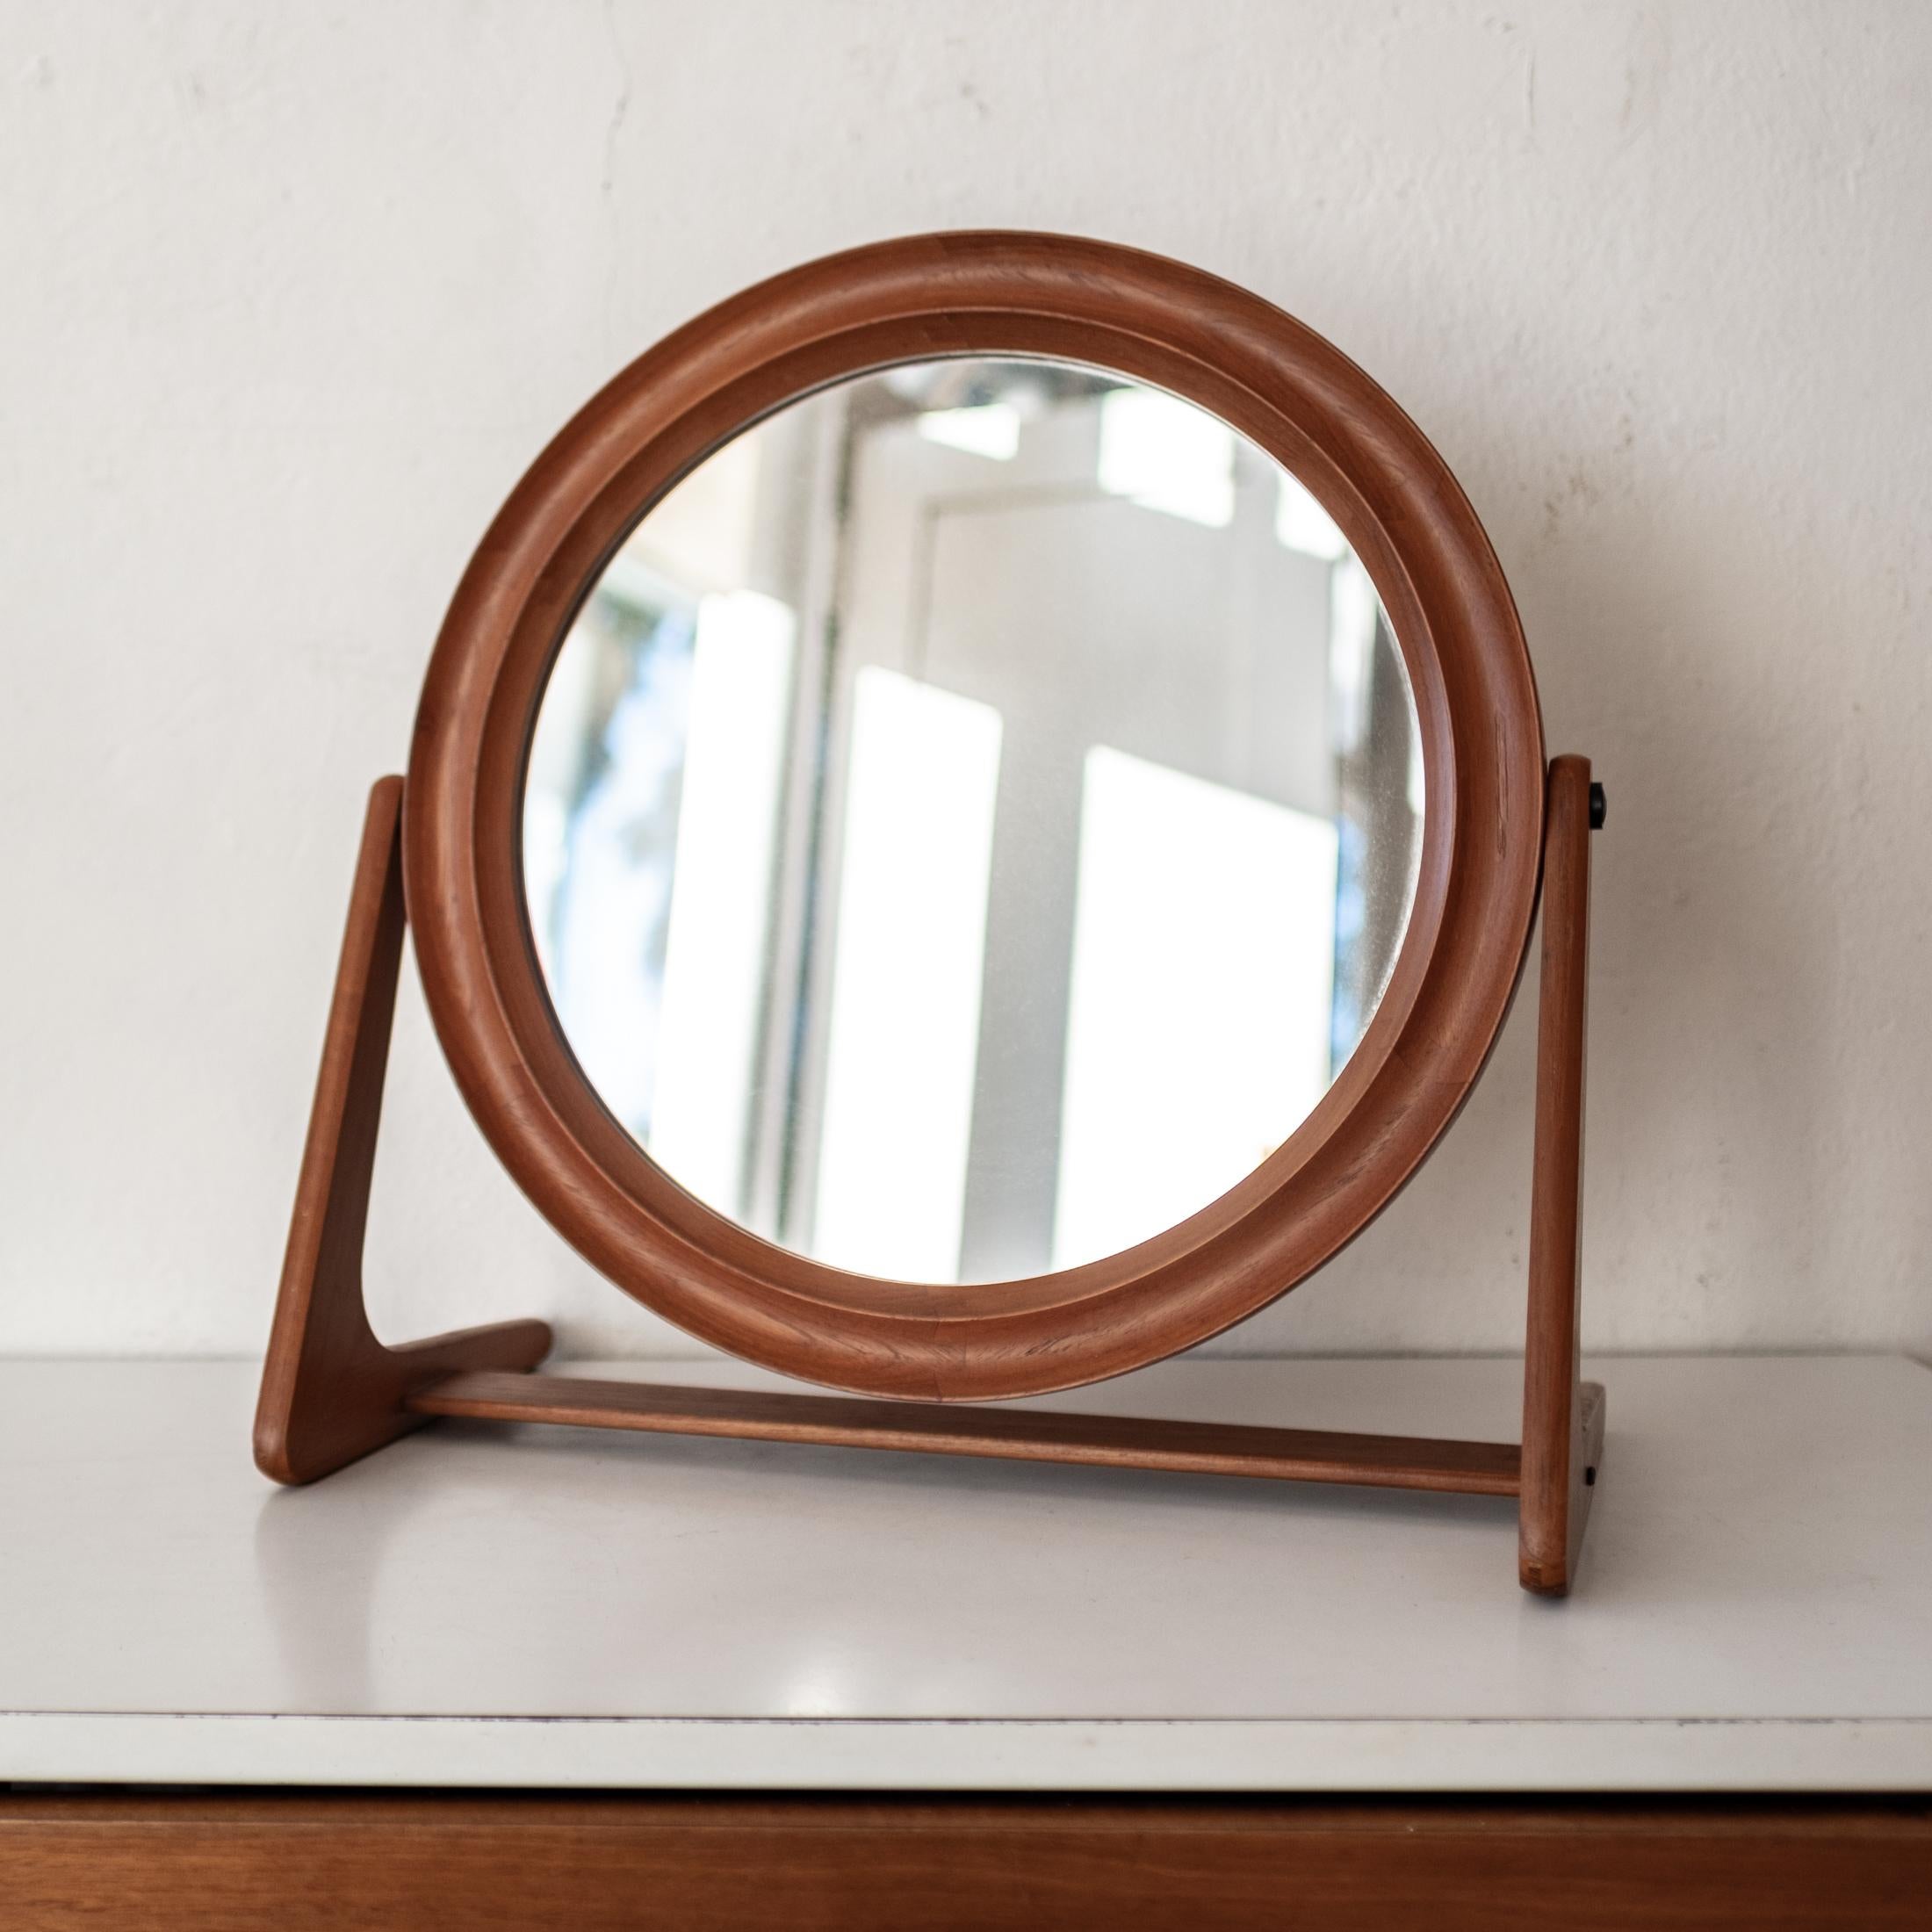 Pedersen and Hansen Danish Modern Teak Vanity or Table Top Adjustable Mirror In Good Condition For Sale In San Diego, CA